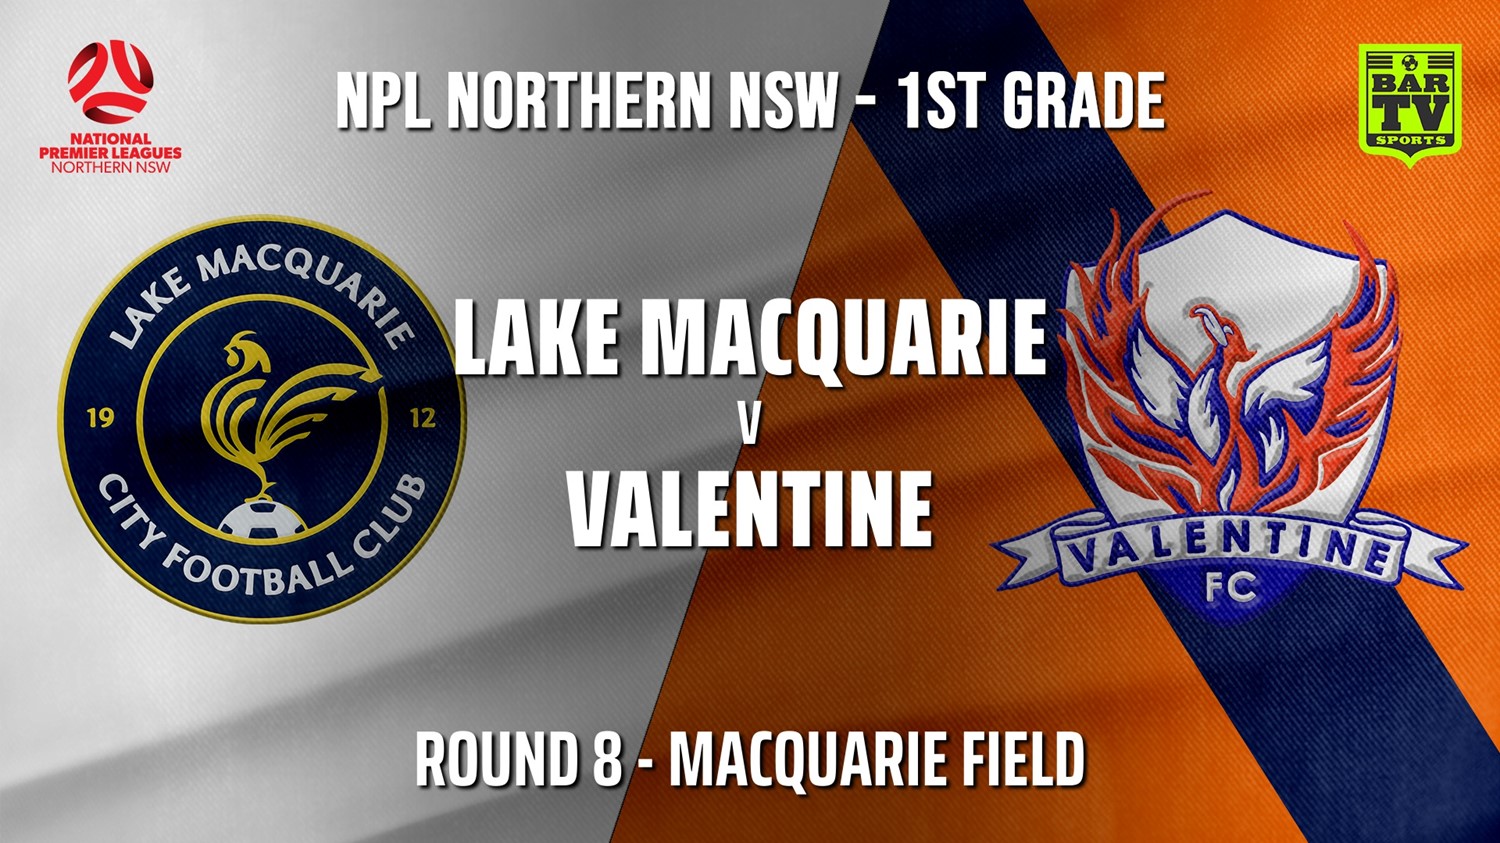 210522-NPL - NNSW Round 8 - Lake Macquarie City FC v Valentine Phoenix FC Minigame Slate Image